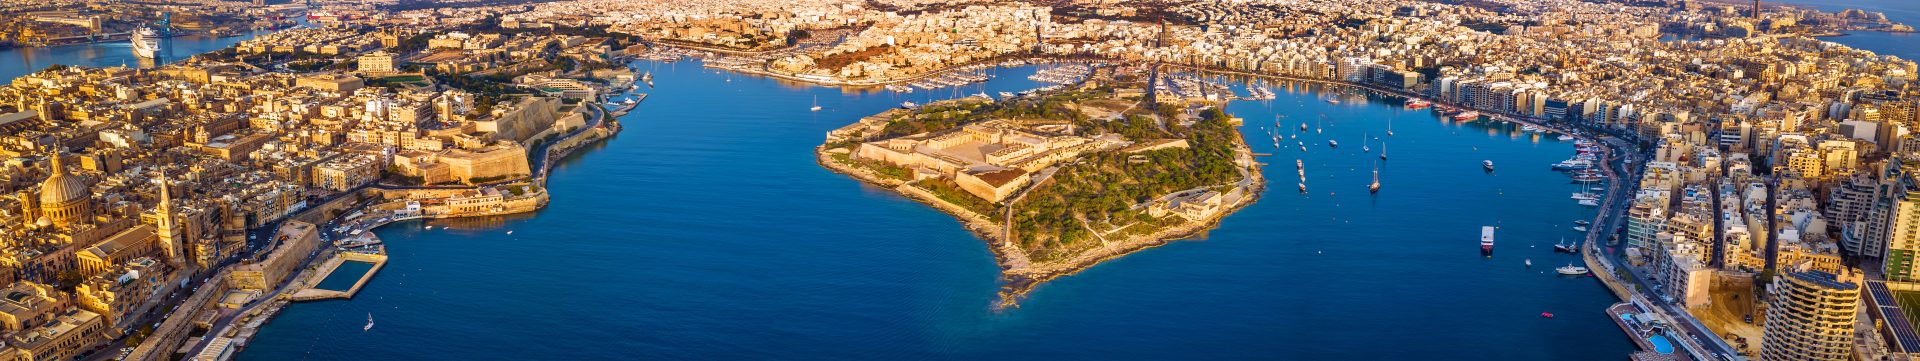 Valletta,,Malta,-,Aerial,Panoramic,Skyline,View,Of,Valletta,,Sliema,